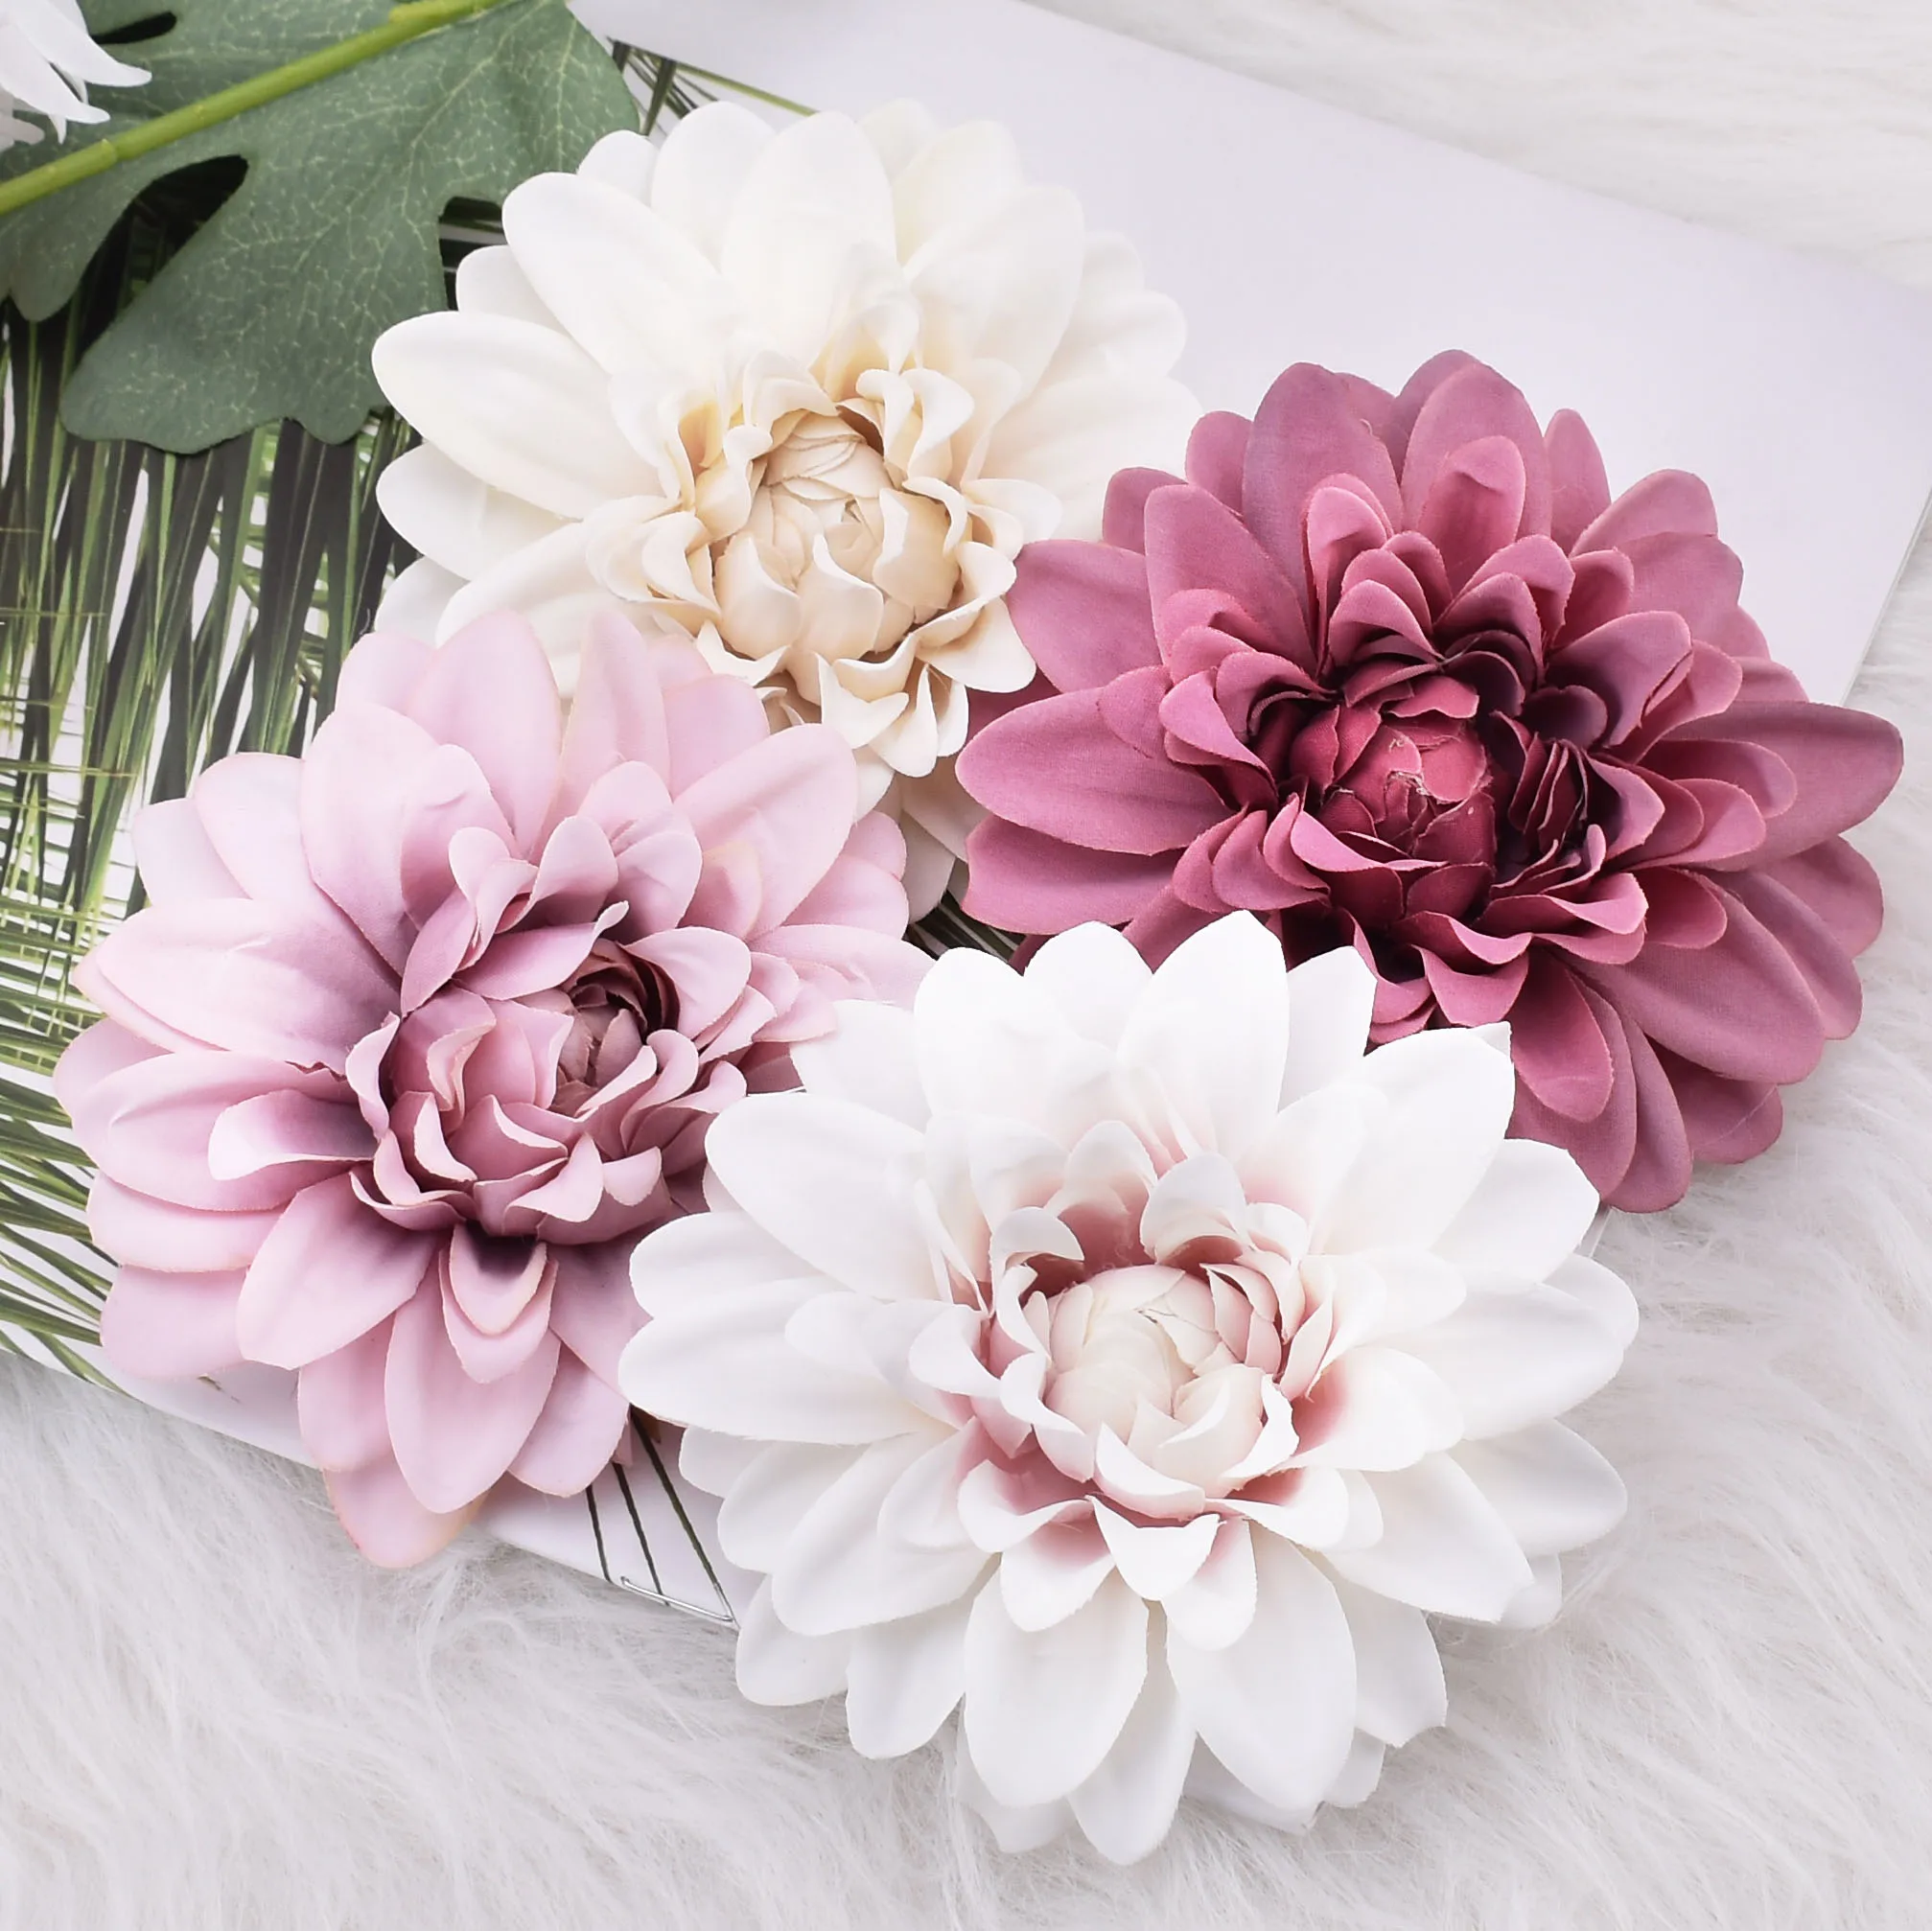 HMT 20pcs Dahlia Artificial Silk Flowers Heads For Wedding Decoration Rose DIY Wreath Gift Box Scrapbooking Craft Fake Flower